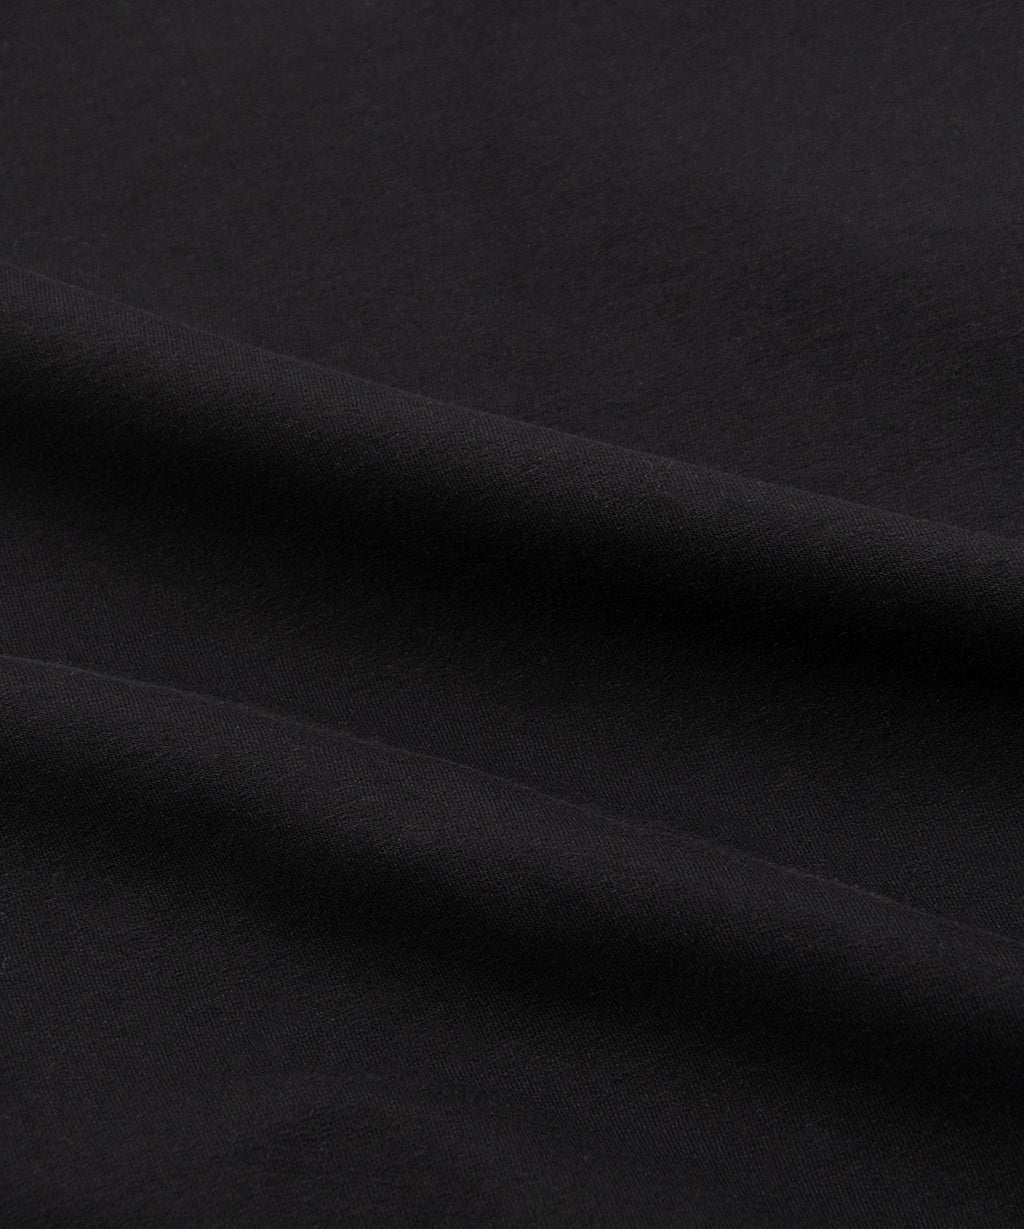  Fabric closeup on Paper Planes Full Zip Hoodie, color Black.